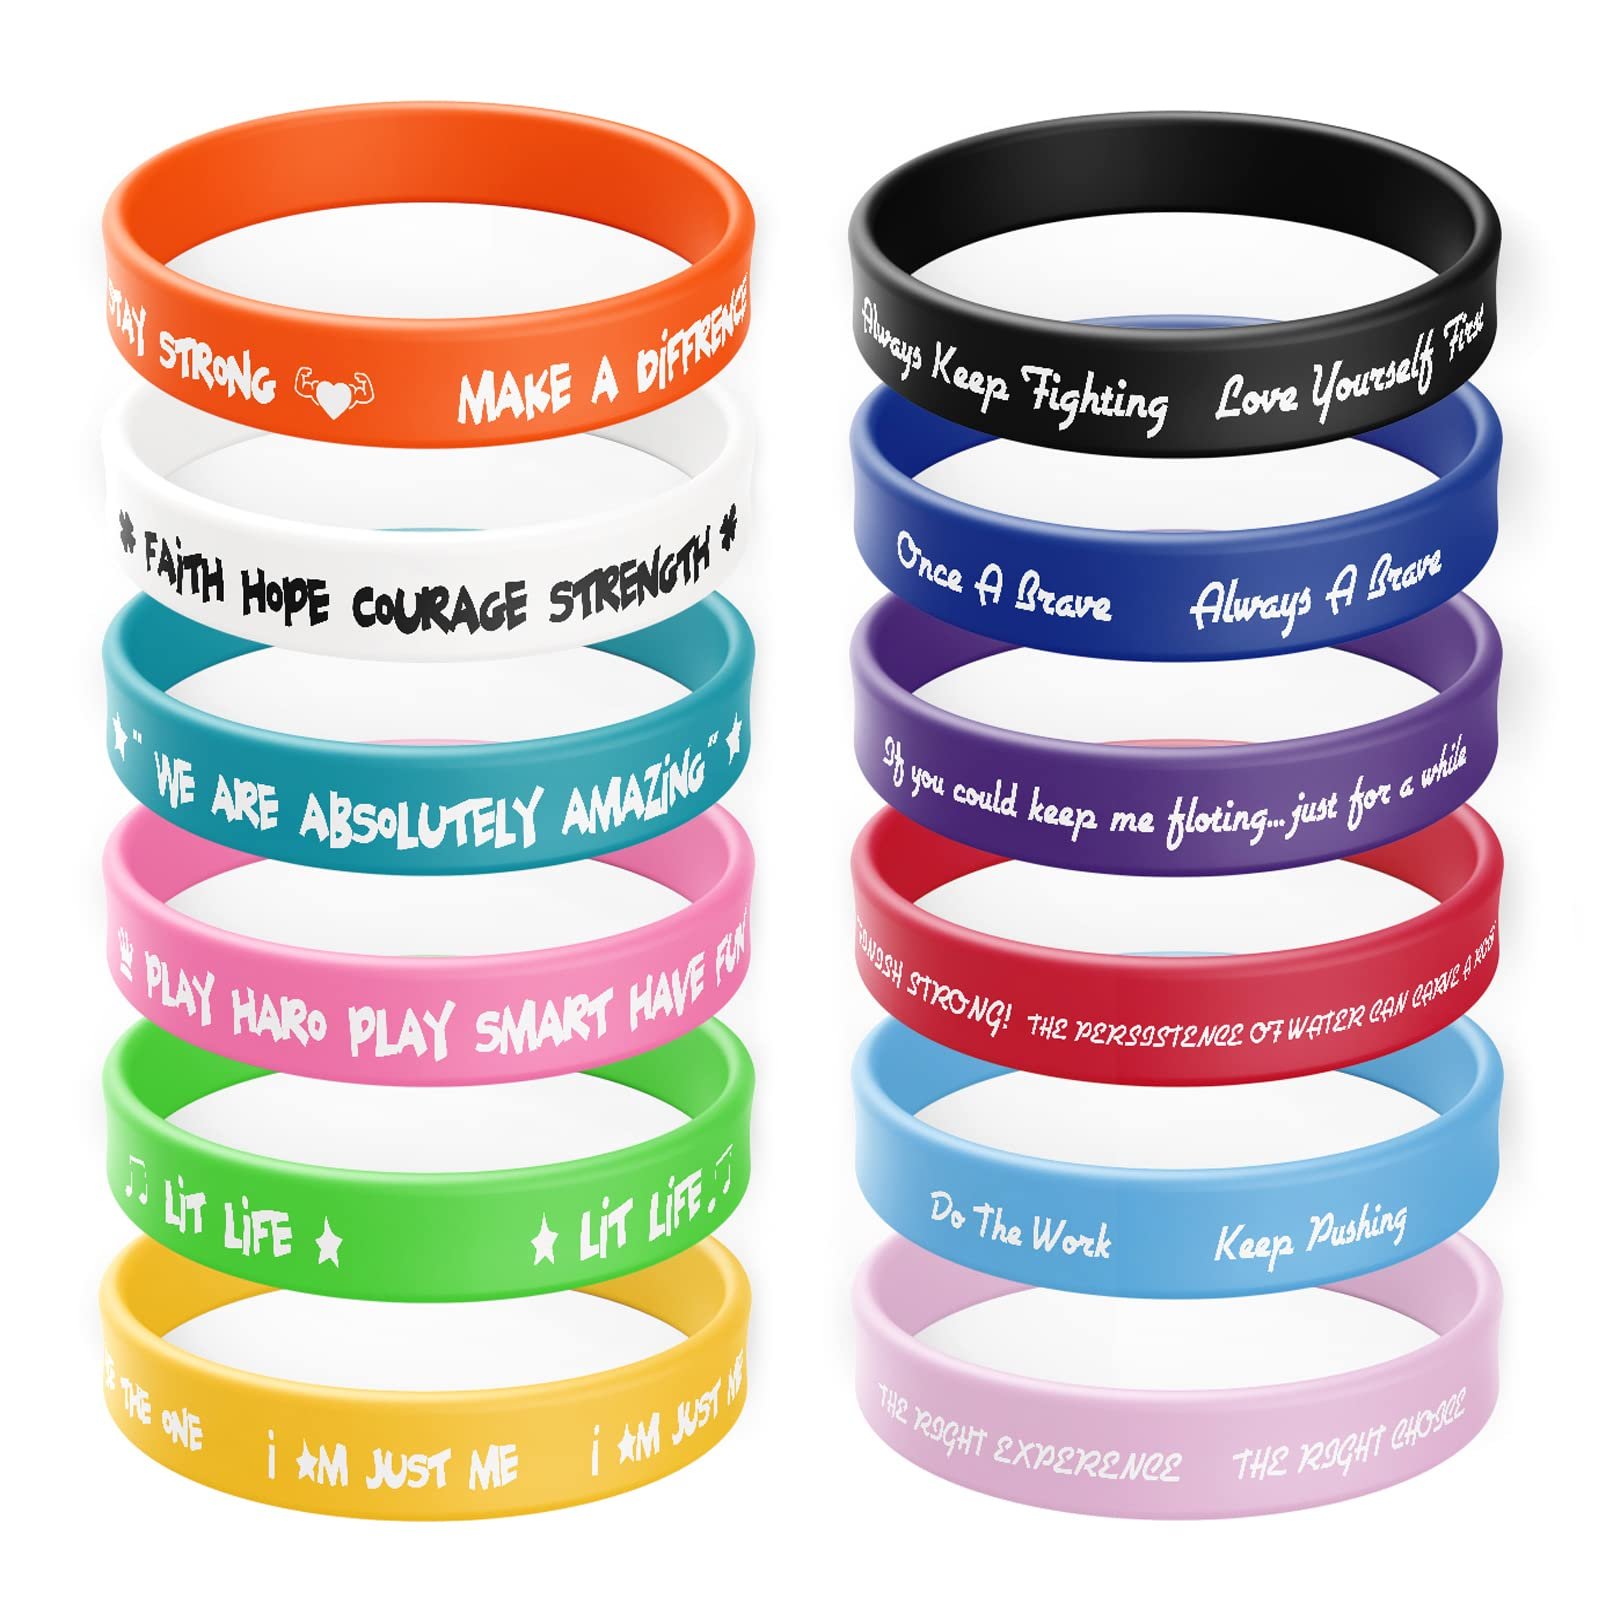 customized New style rubber friendship bracelets| Alibaba.com